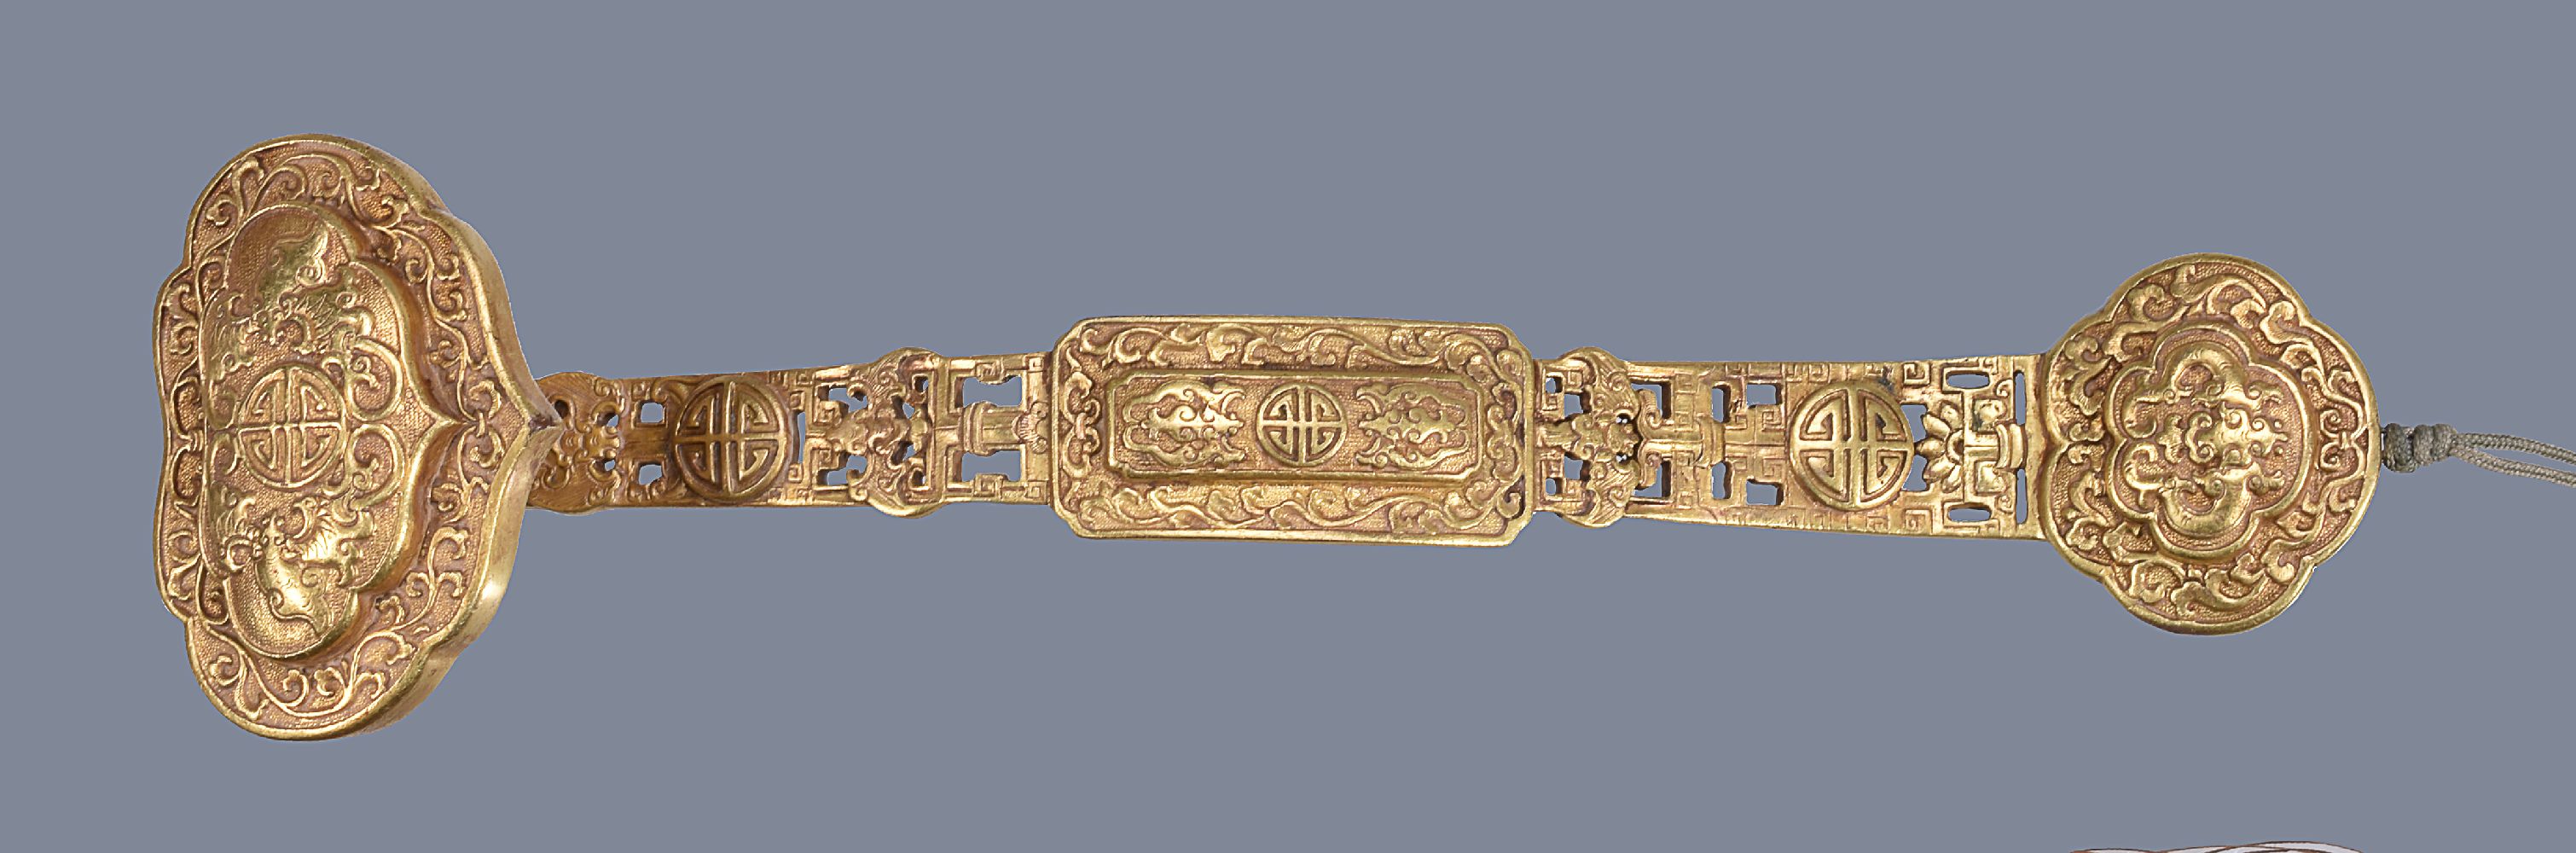 A Chinese gilt bronze ruyi sceptre - Image 2 of 6